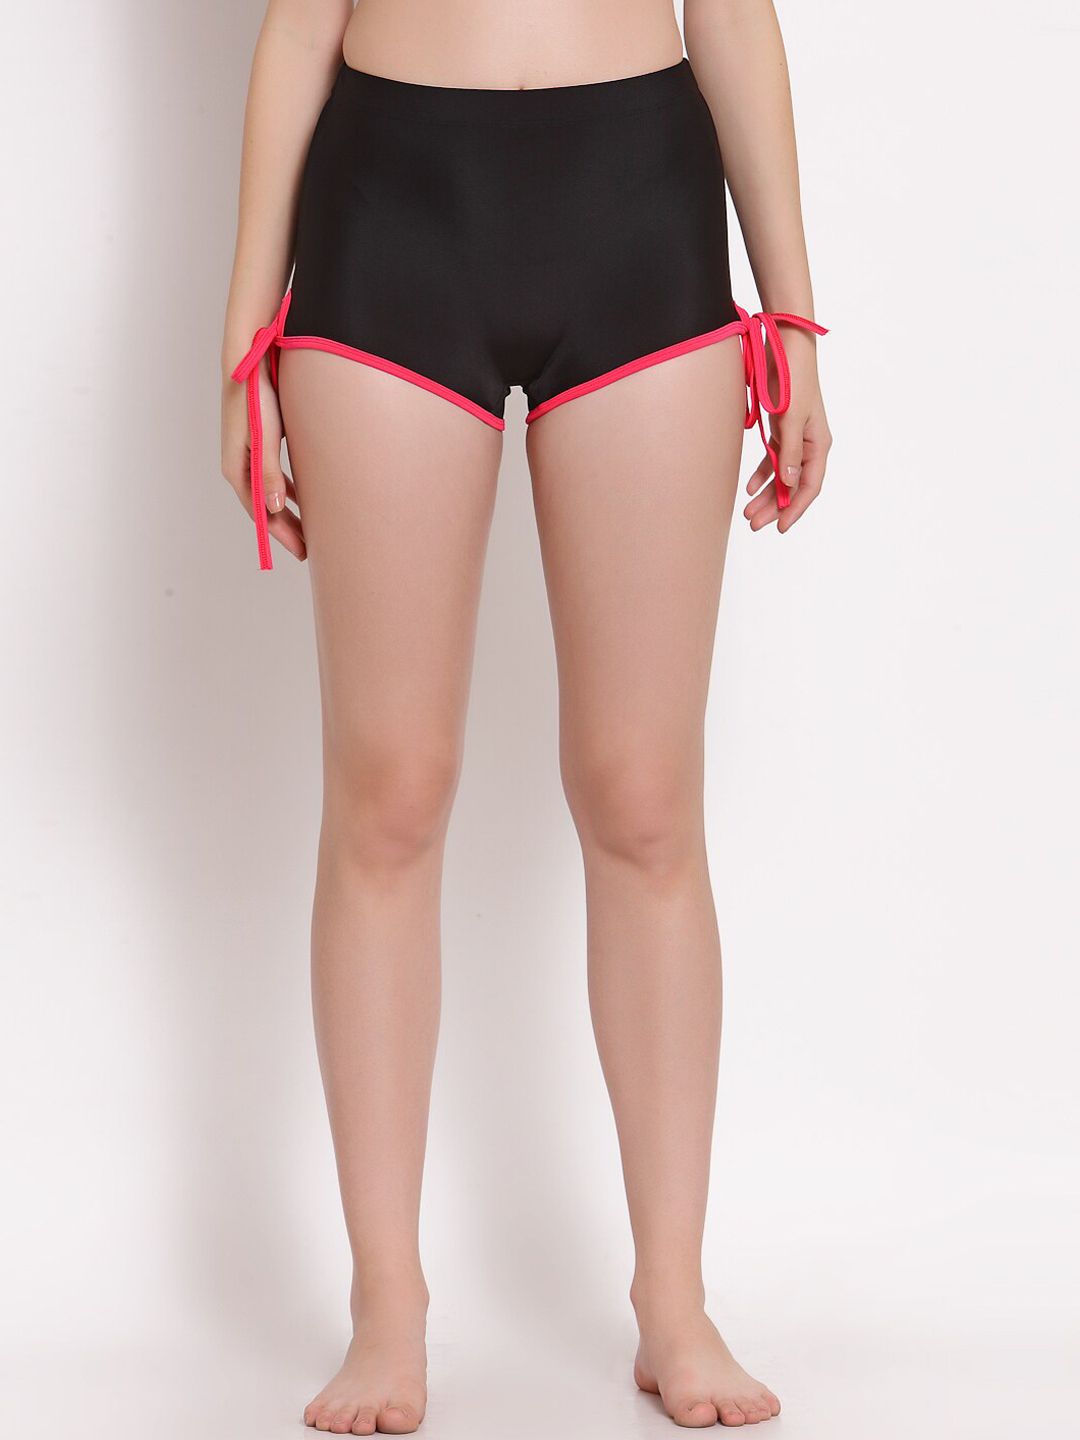 CUKOO Women Black Solid Comfort-Fit Swim Bottoms CK19-240 Price in India